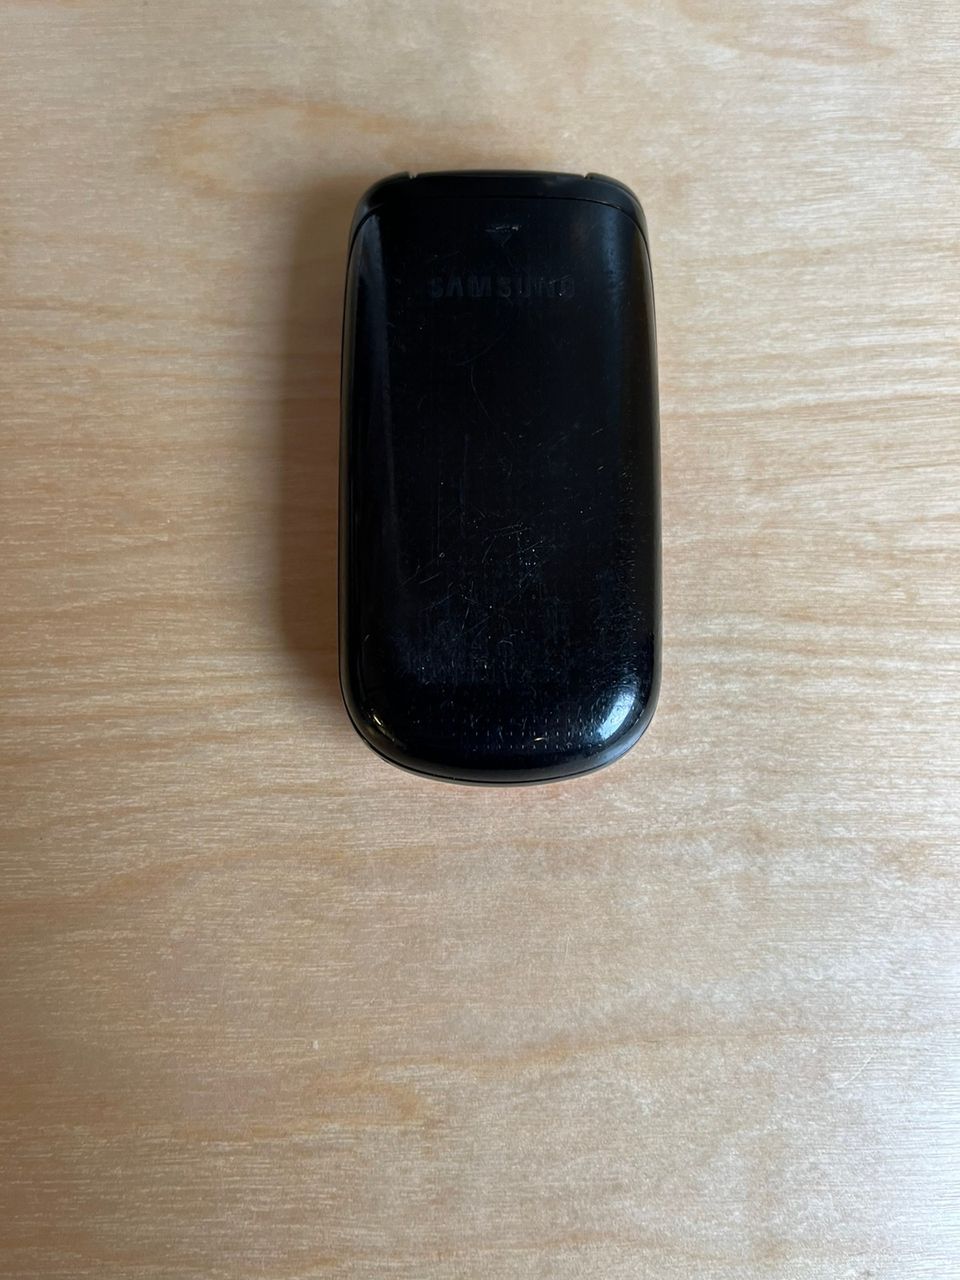 Samsung simpukkapuhelin GT-E1150i